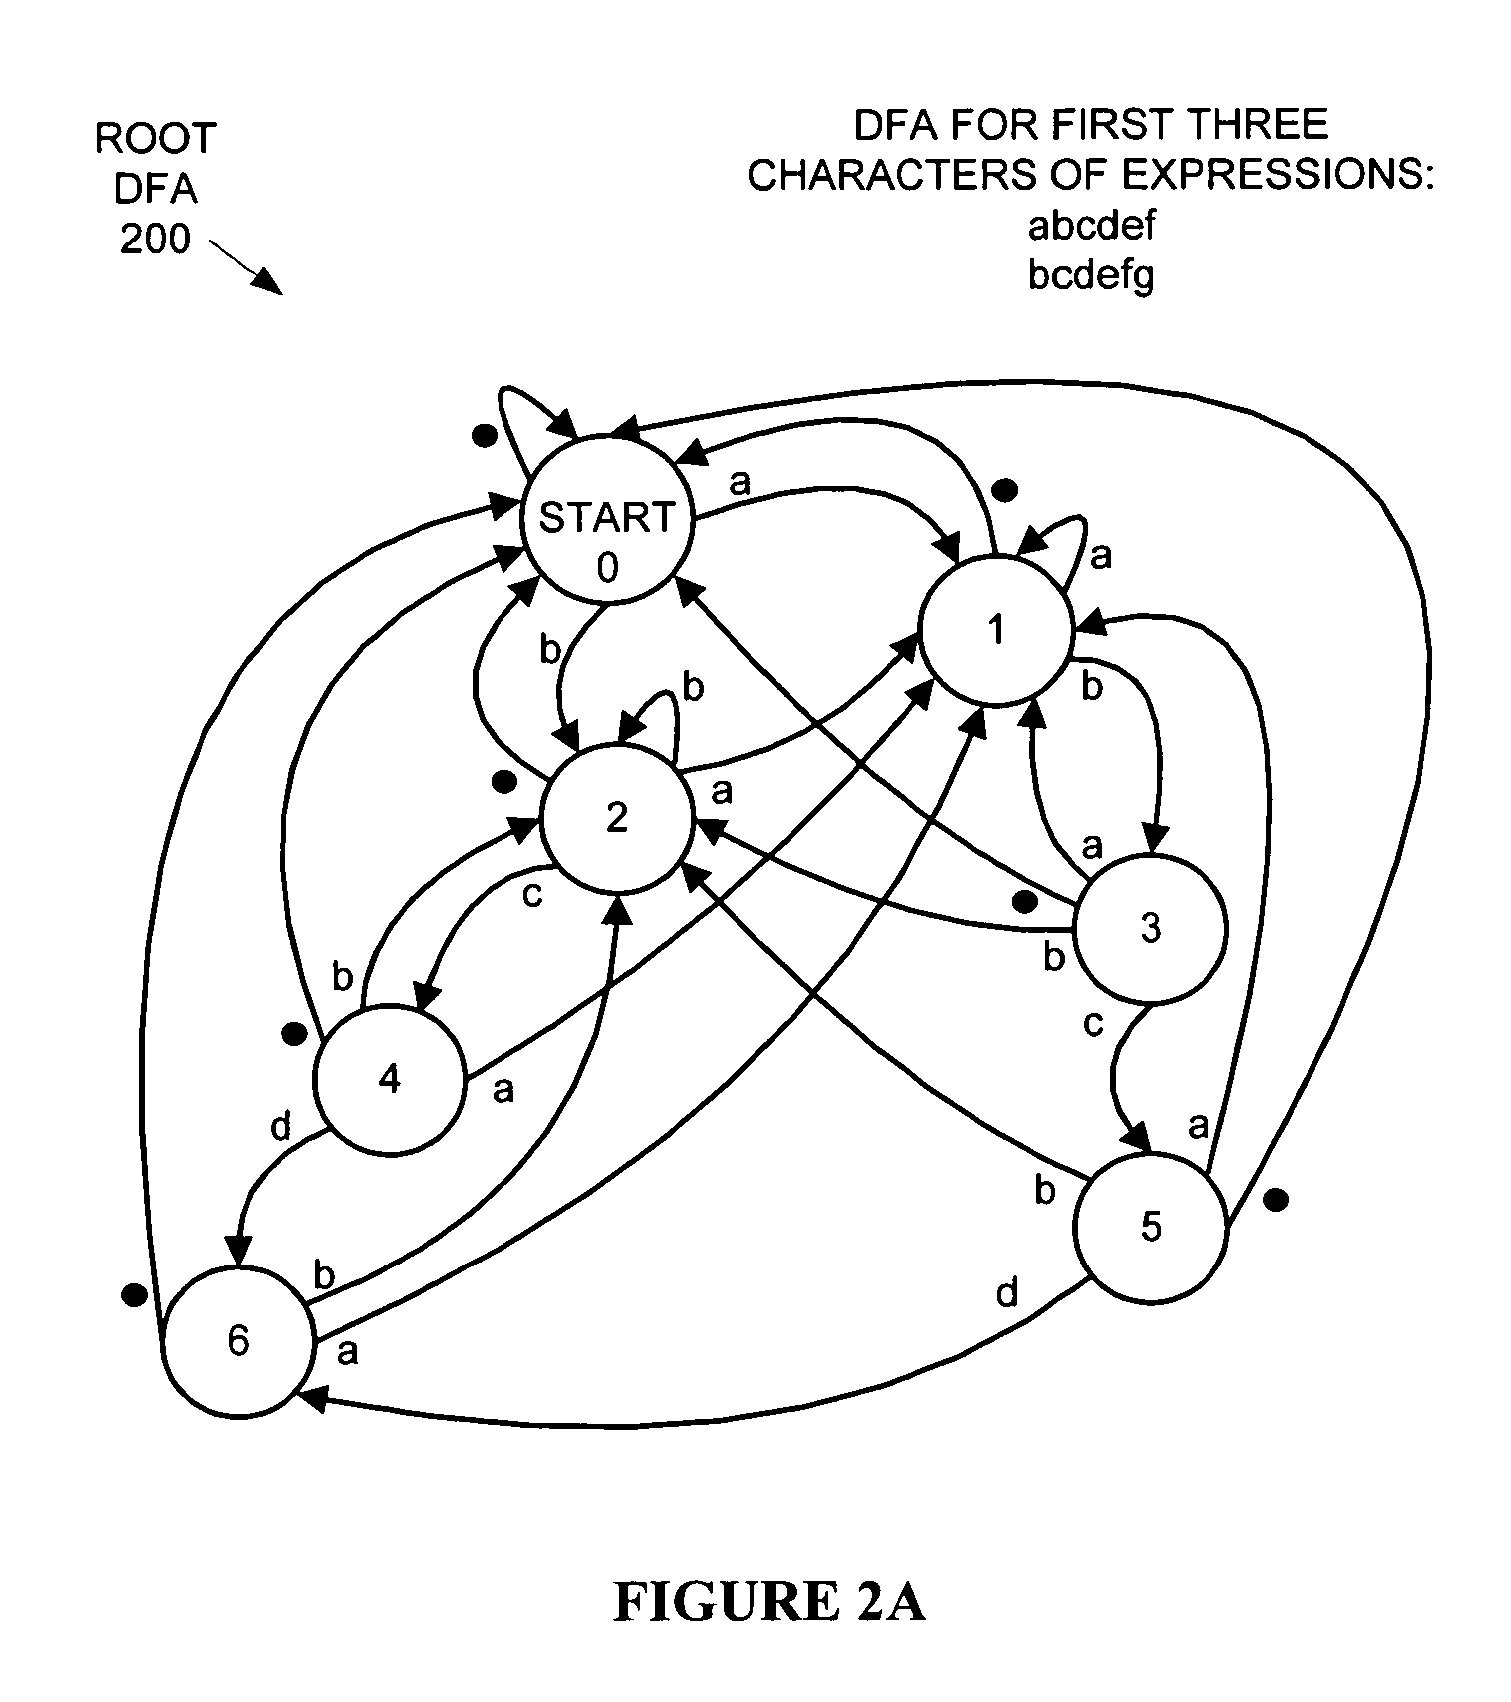 Hierarchical tree of deterministic finite automata